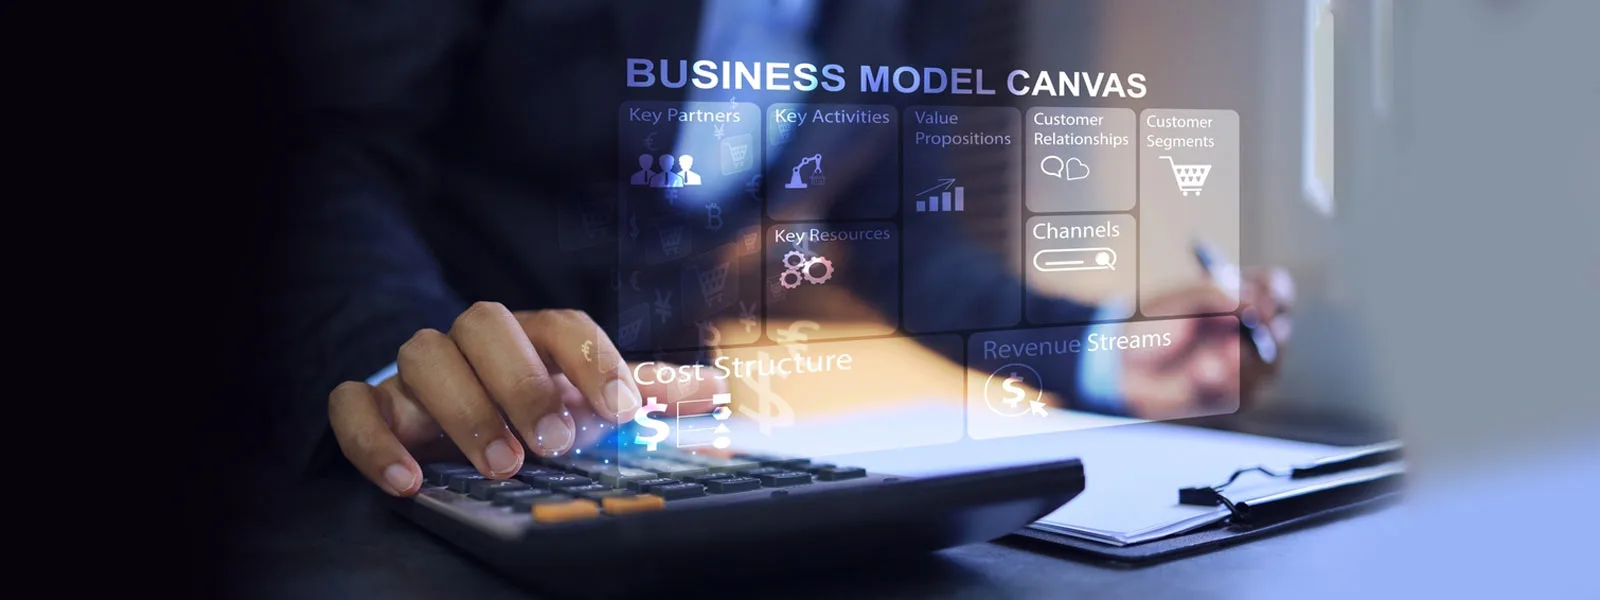 customer segments business model canvas